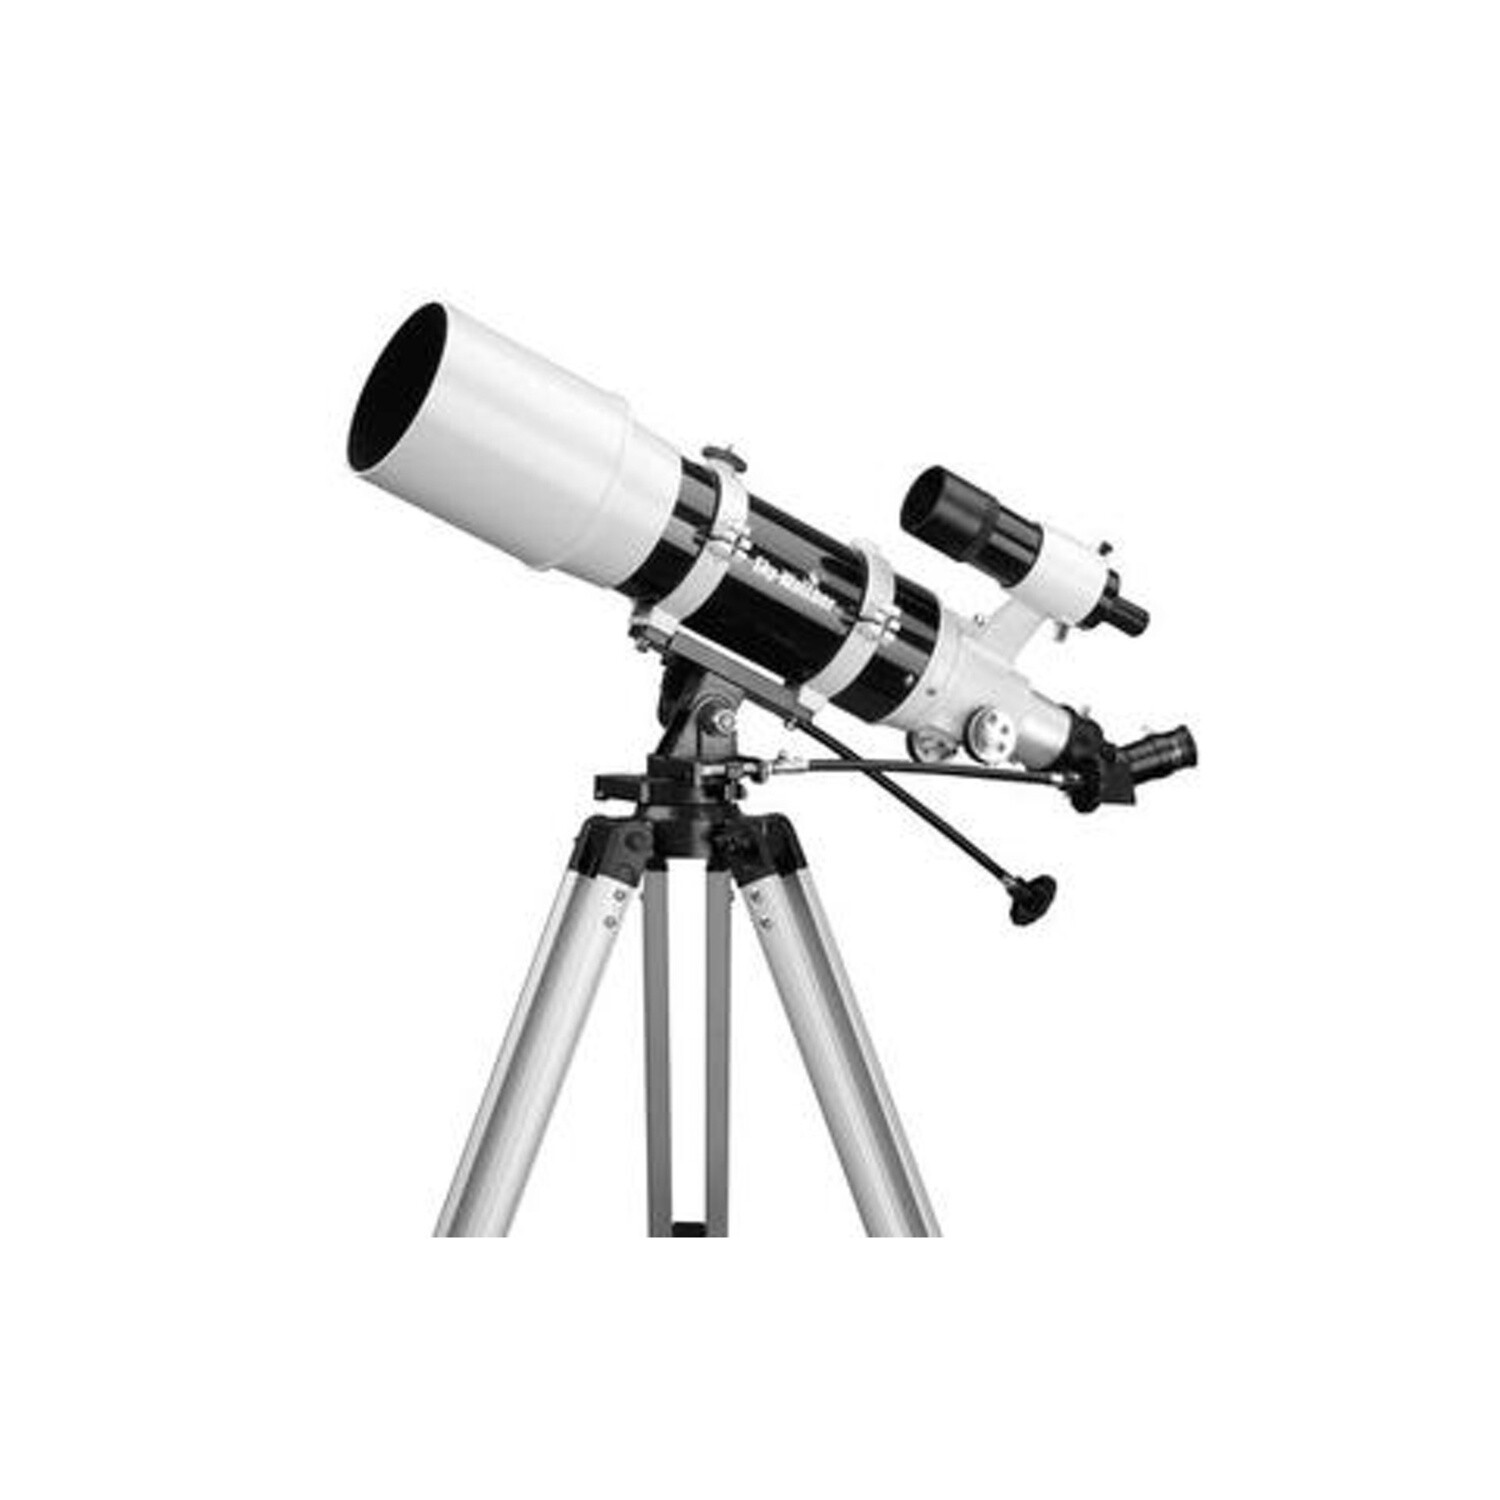 SkyWatcher 120 AZ3 Refractor Telescope